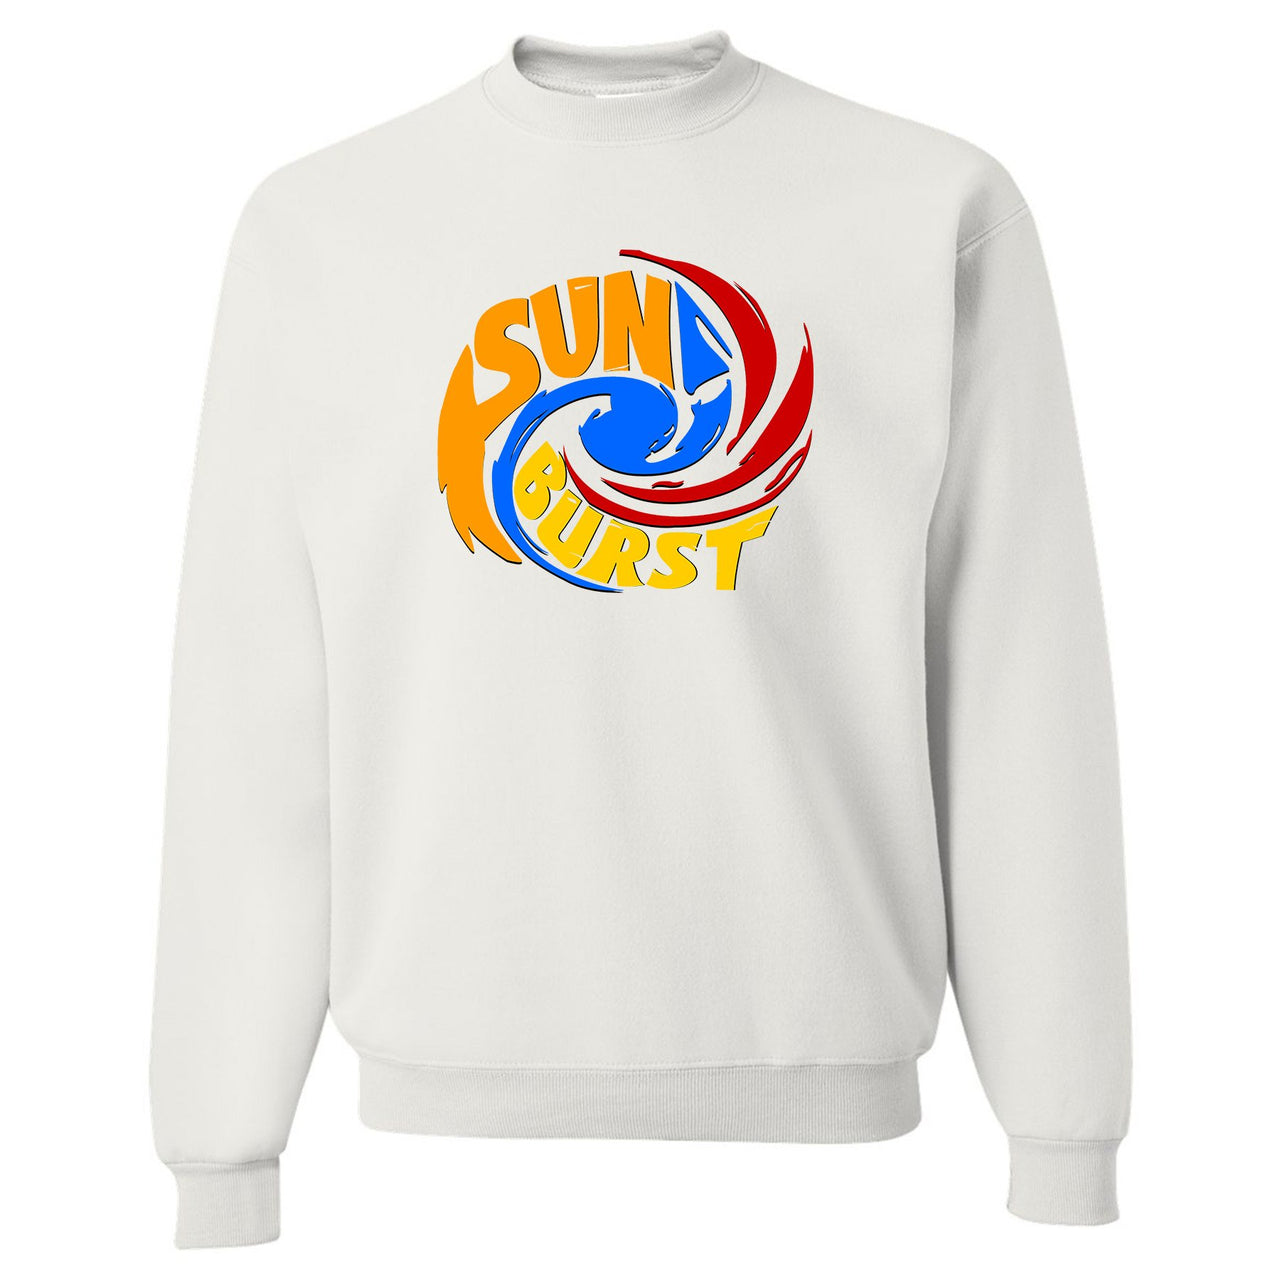 Printed on the front of the Air Max 97 Sunburst white sneaker matching crewneck sweatshirt is the Sunburst Hurricane logo